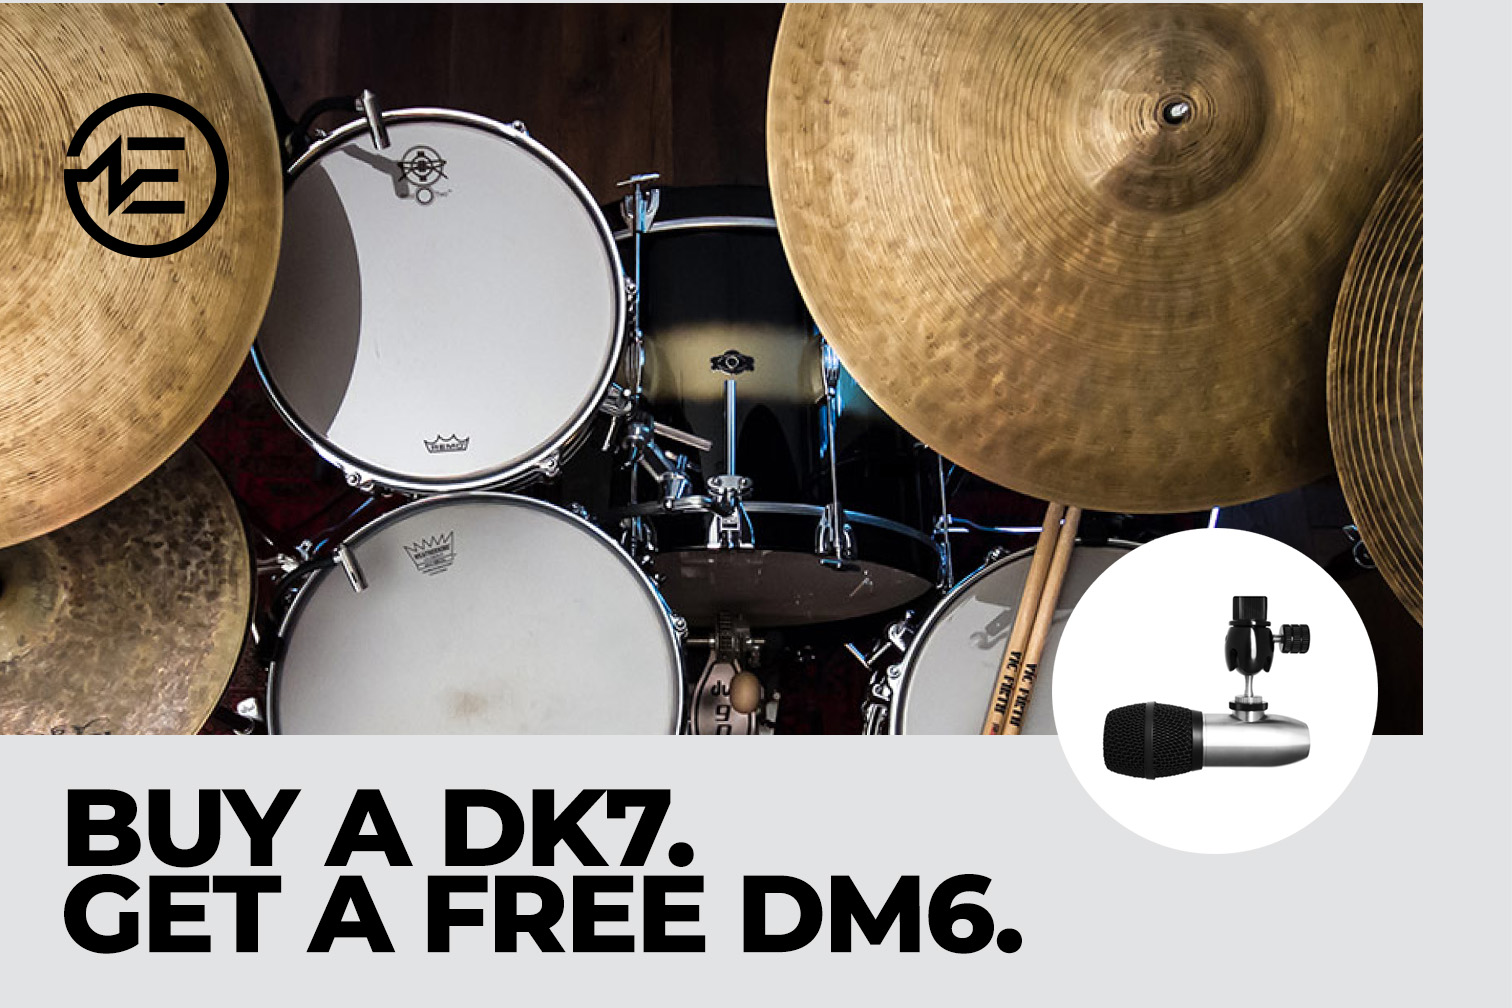 Make your DK7 even better.